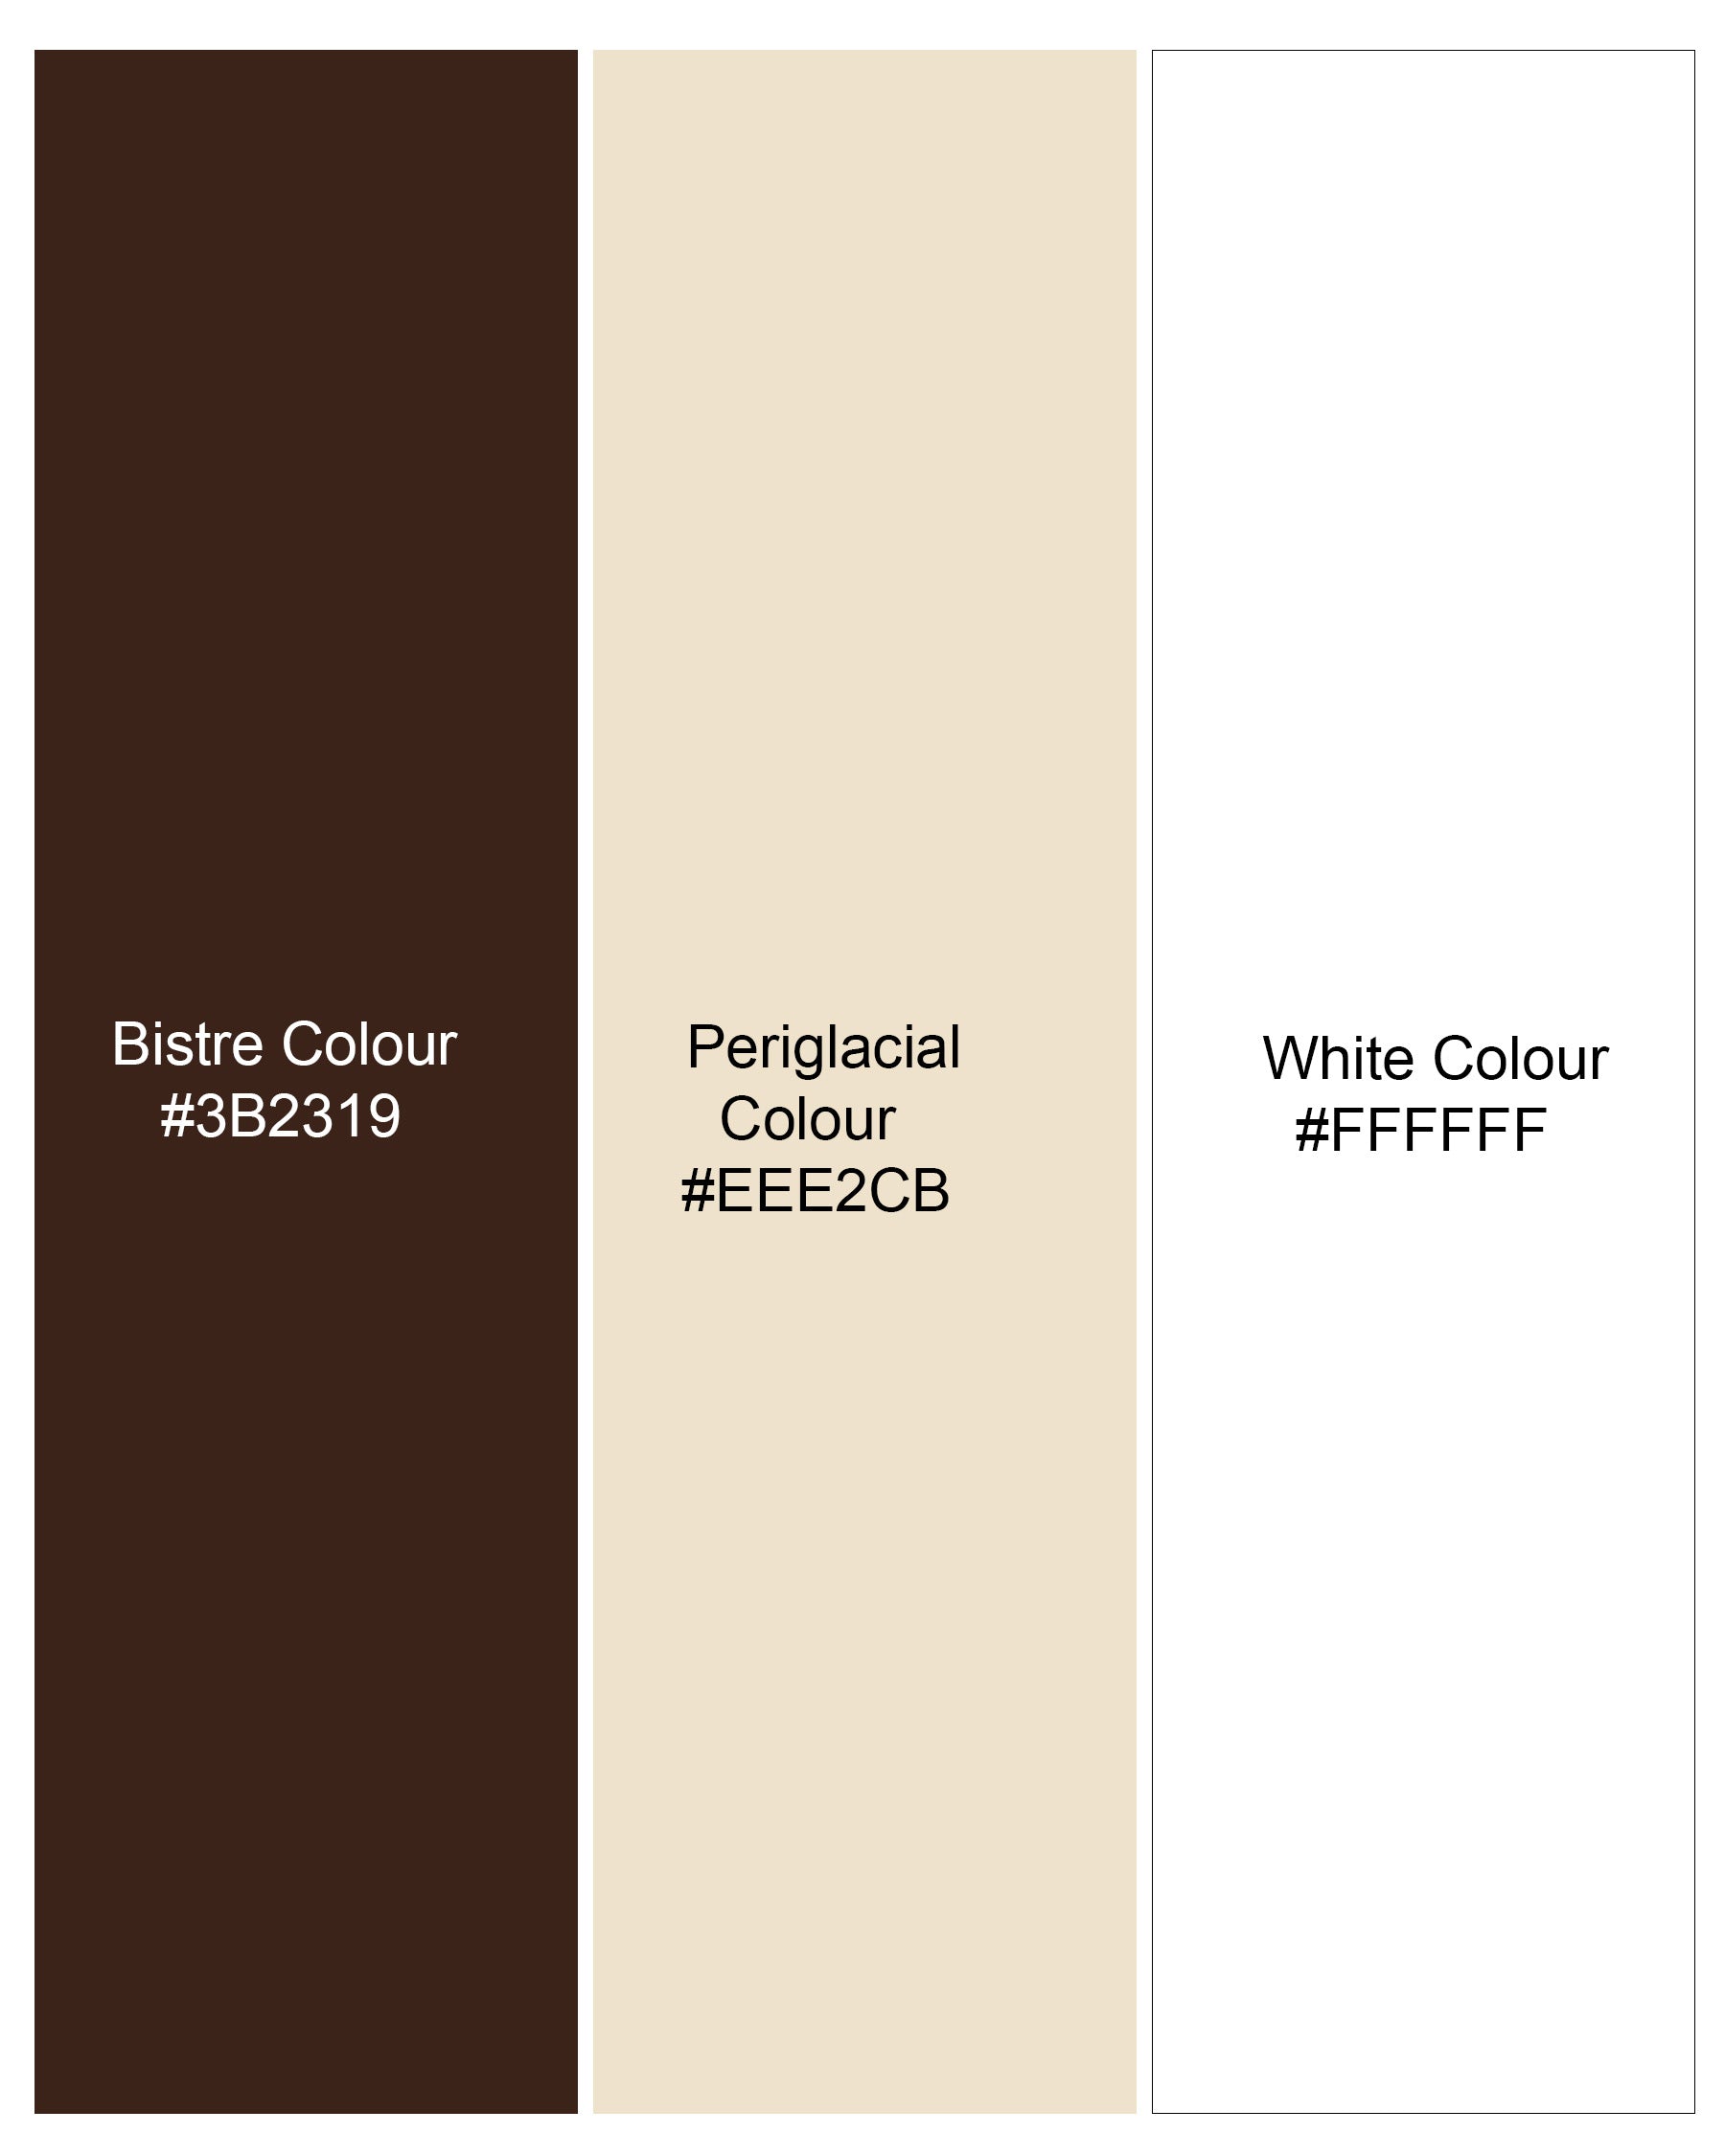 Bistre Brown with Periglacial Cream and White Luxurious Linen Designer Block Pattern Shirt         8051-P118-38, 8051-P118-39, 8051-P118-40, 8051-P118-42, 8051-P118-44, 8051-P118-46, 8051-P118-48, 8051-P118-50, 8051-P118-52